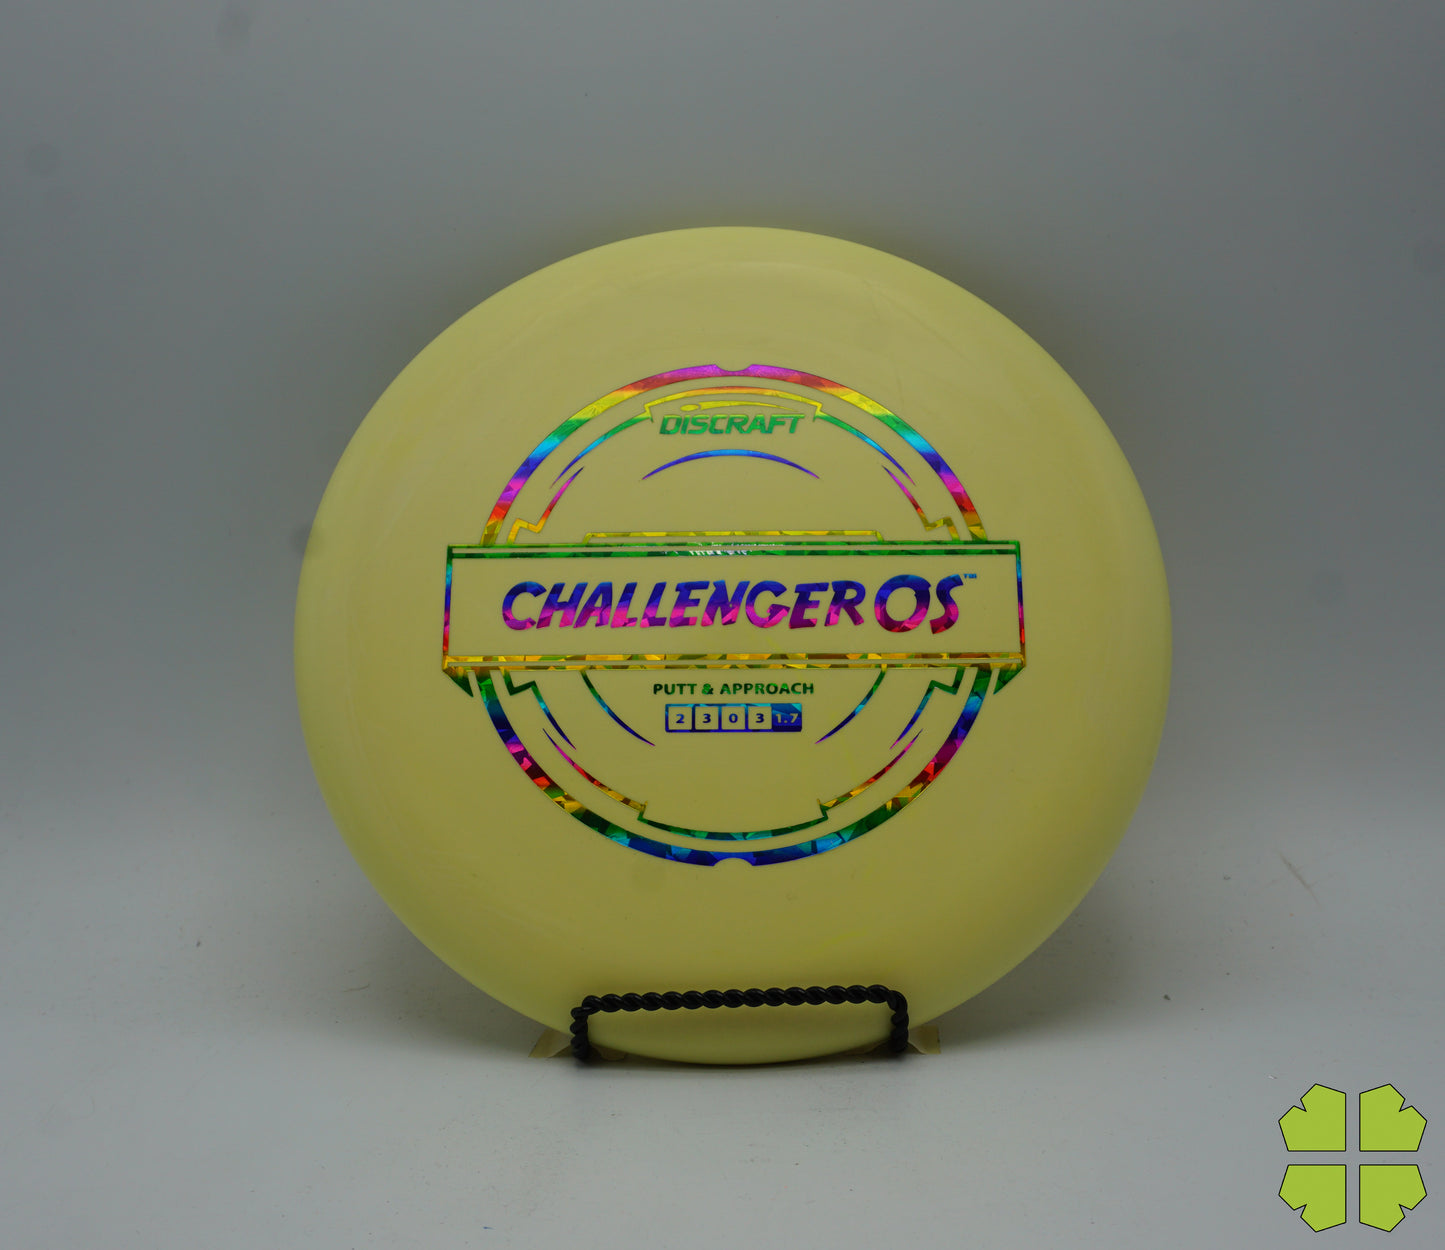 Putter Line Challenger OS